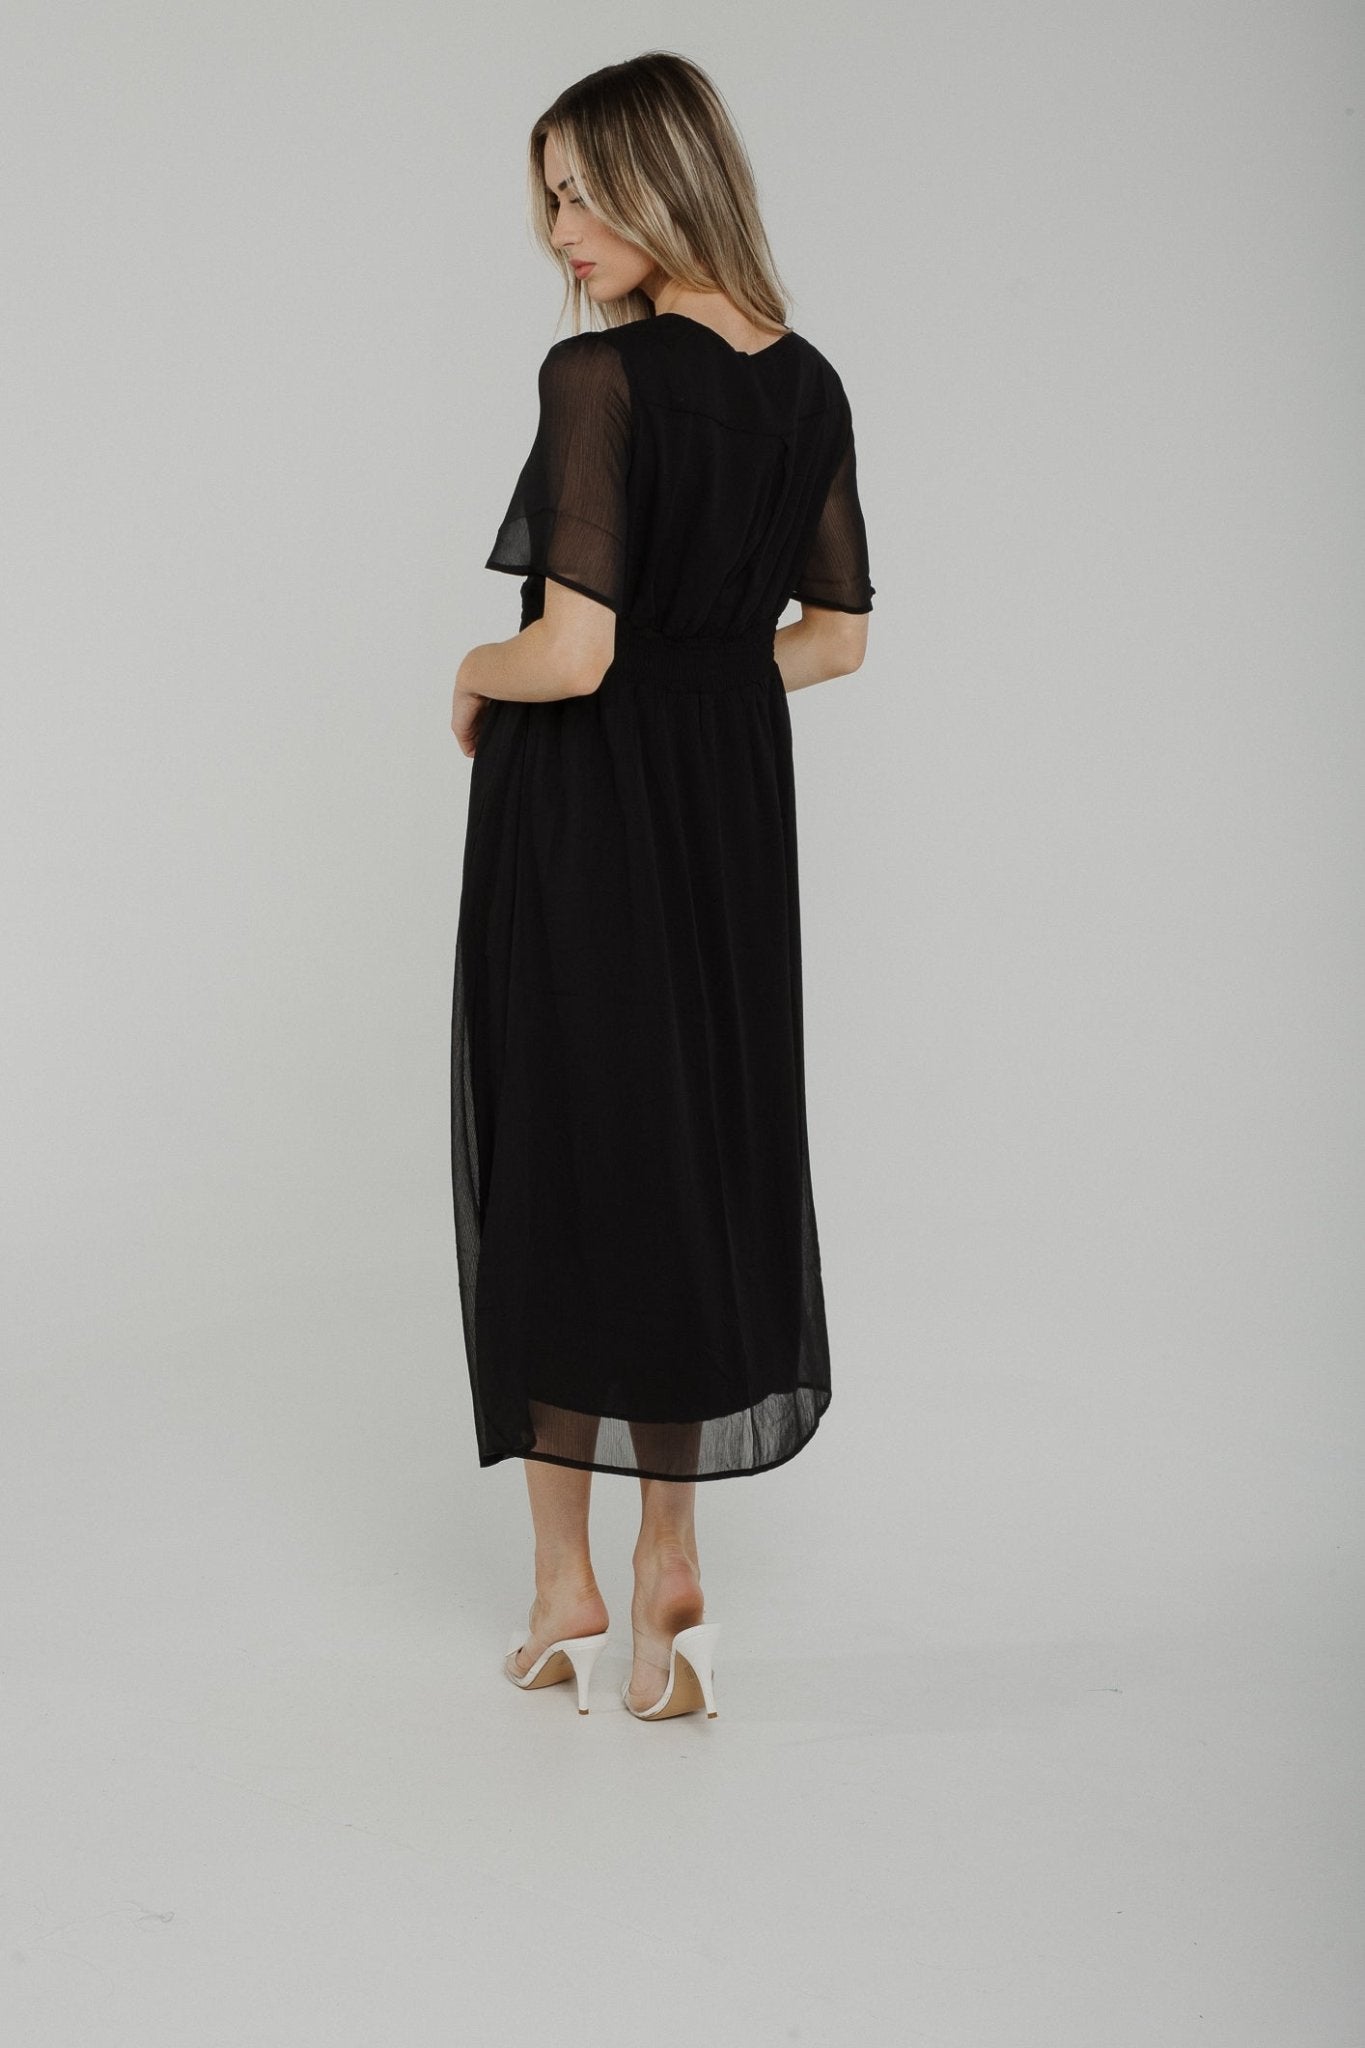 Polly Sheer Sleeve Dress In Black - The Walk in Wardrobe